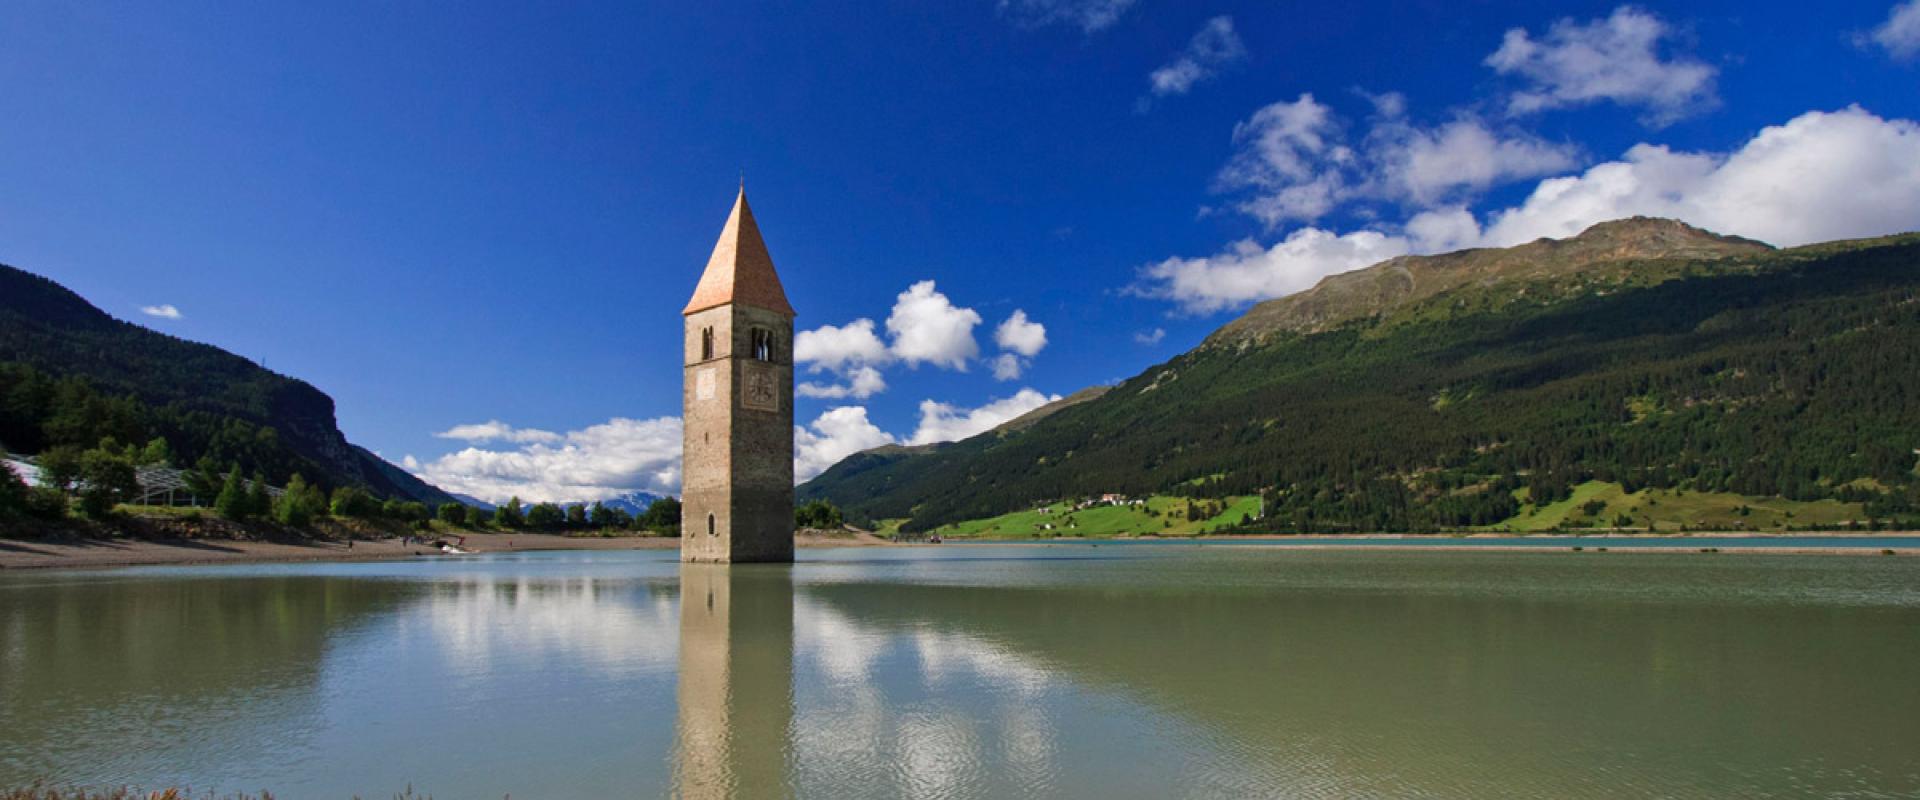 Tour Trentino - North Italy from Dolomites to Garda Lake!